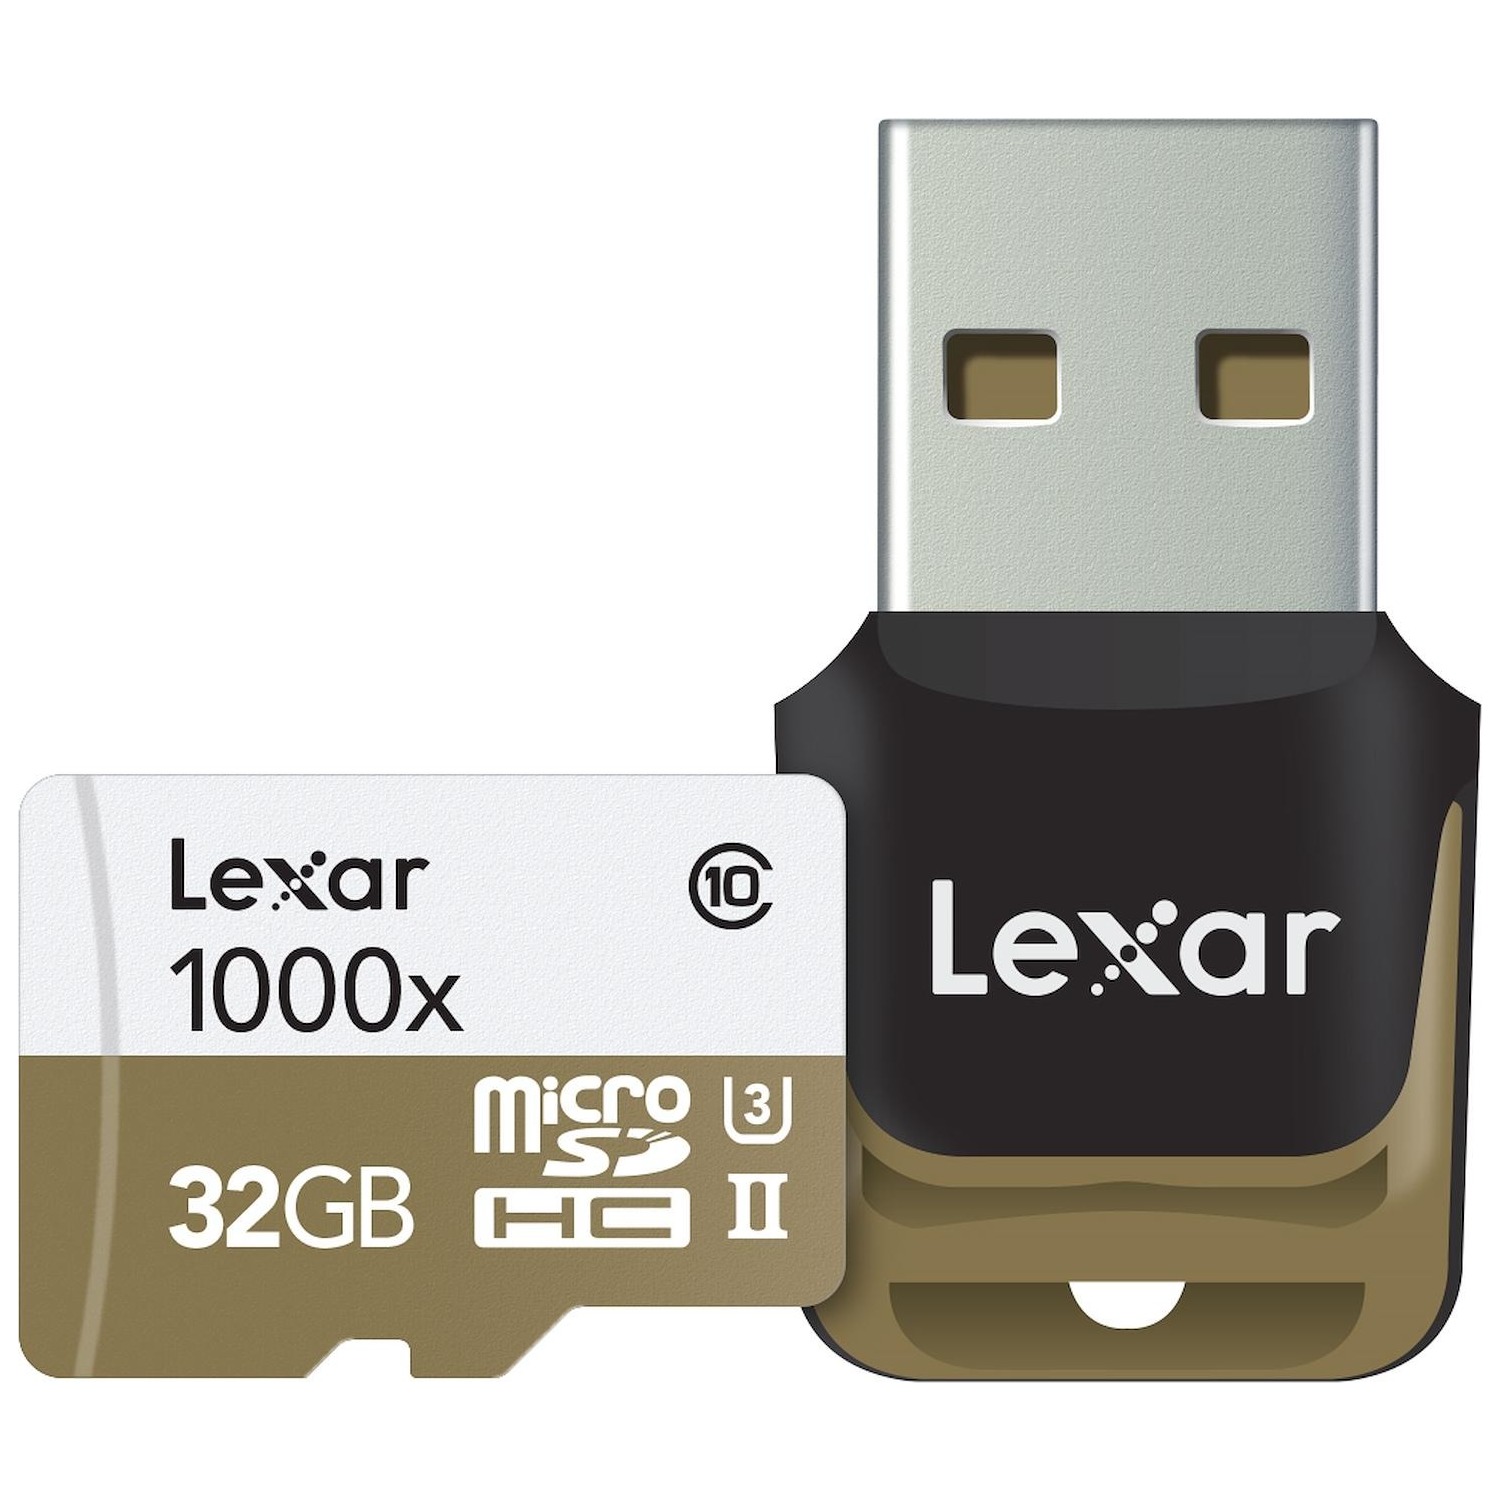 Immagine per MicroSD Lexar HC 1000X GOPRO 32 GB+ reader da DIMOStore